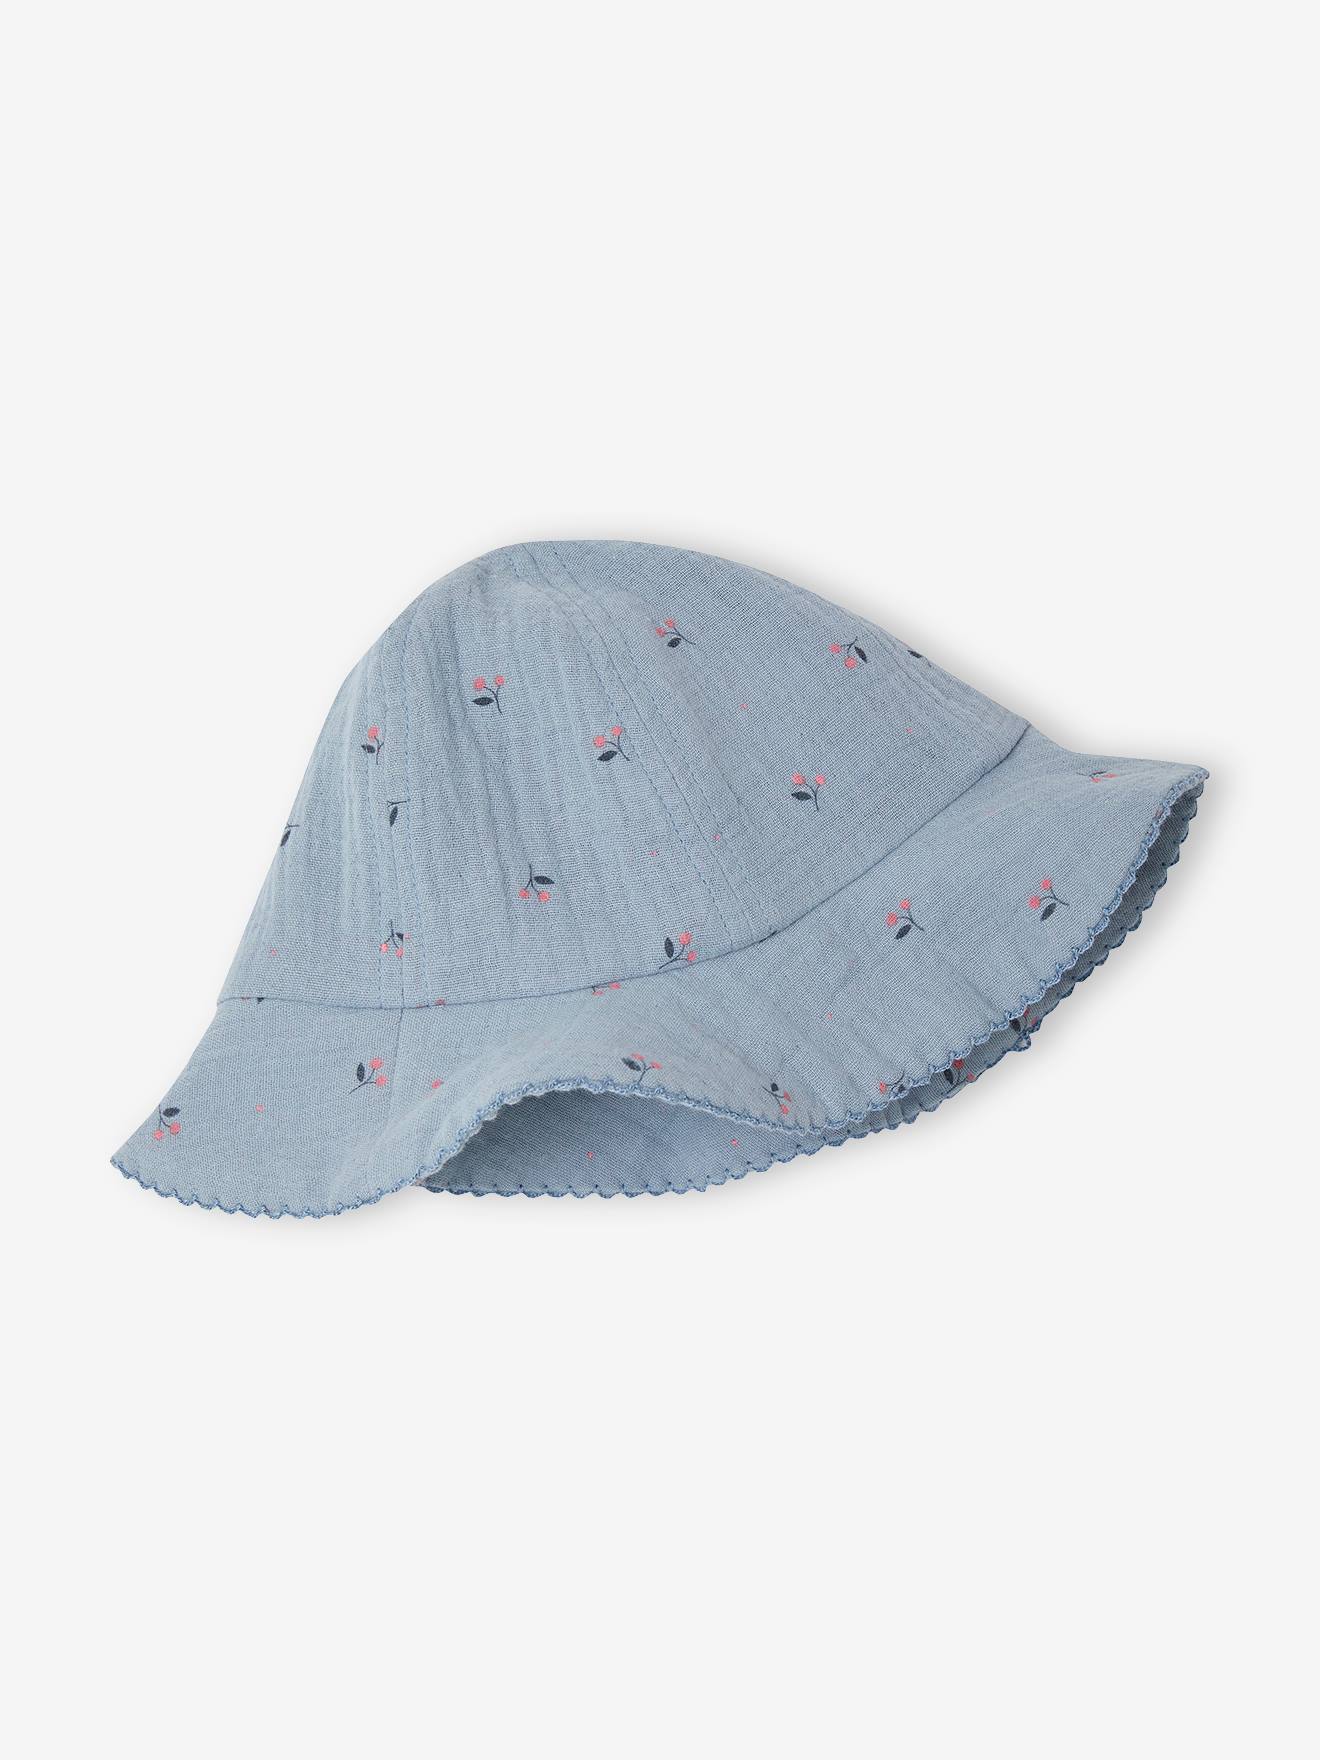 Vertbaudet Dress & Bucket Hat Combo in Cotton Gauze for Newborns Chambray Blue